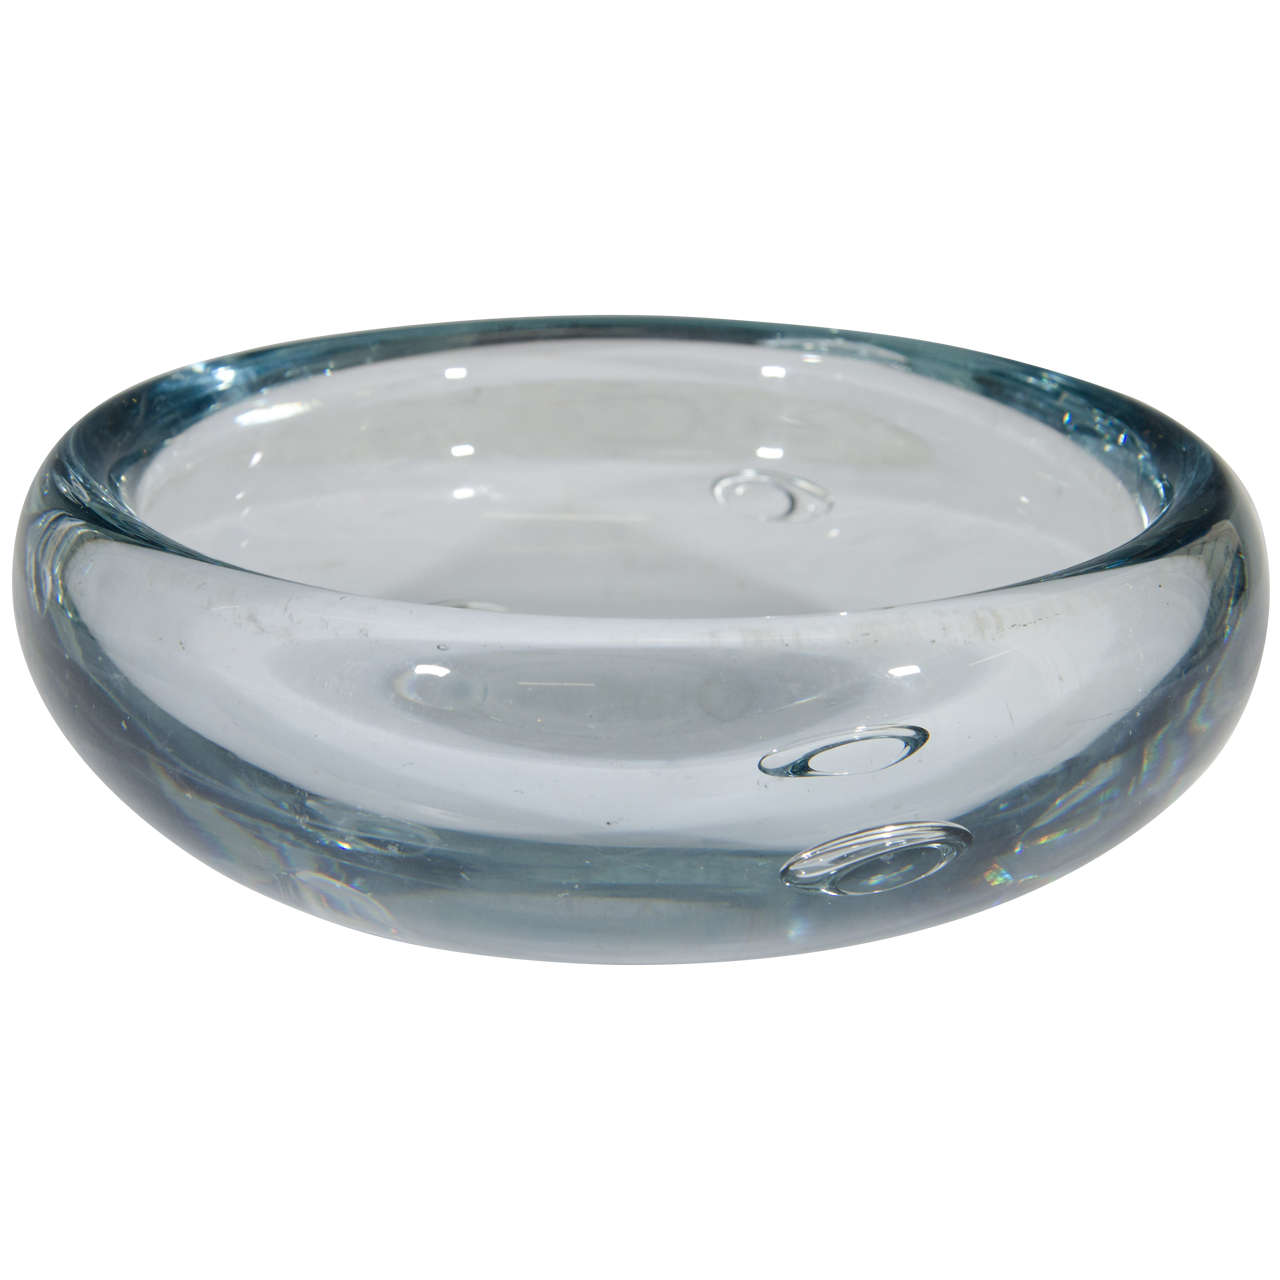 A Midcentury Swedish Art Glass Dish or Bowl